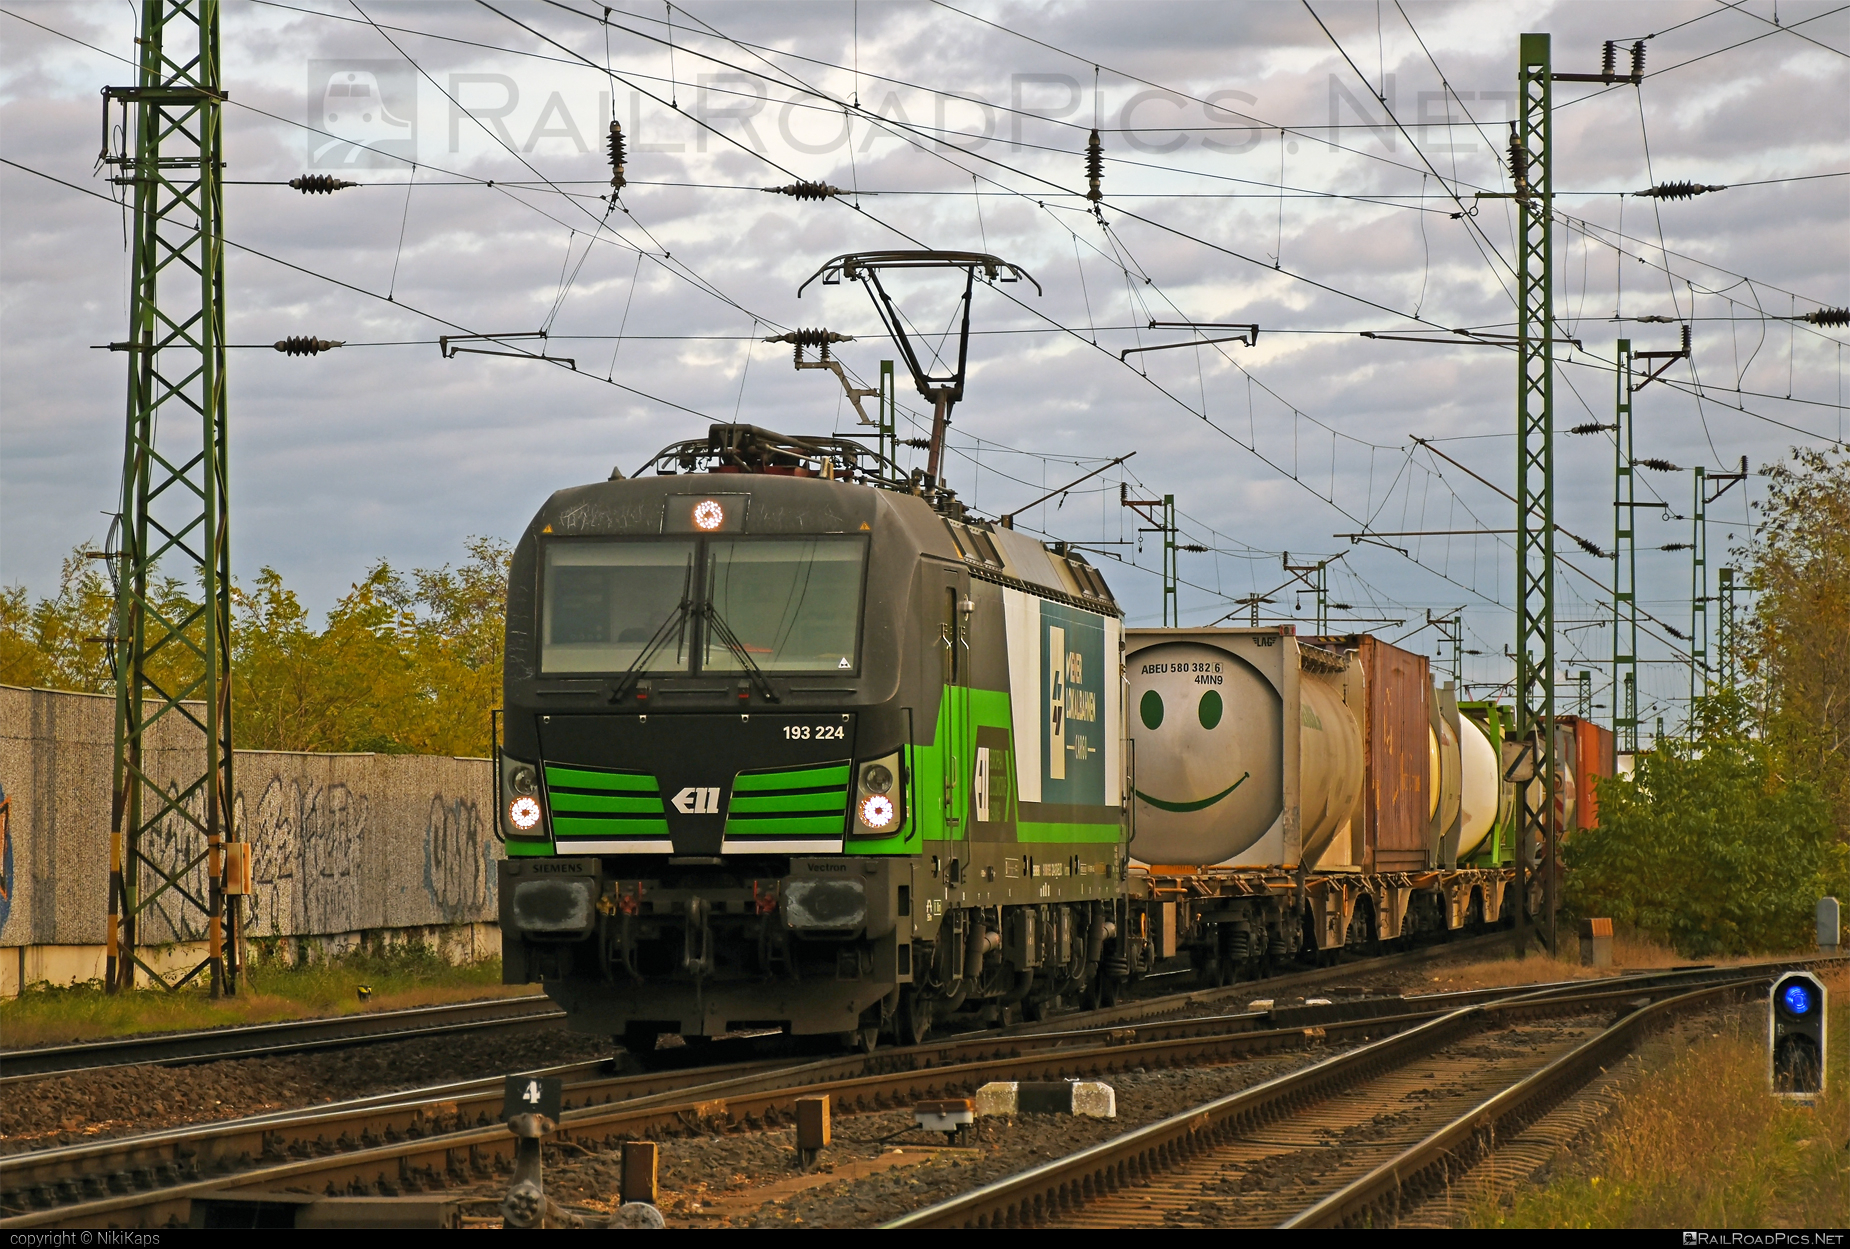 Siemens Vectron AC - 193 224 operated by Wiener Lokalbahnen Cargo GmbH #container #ell #ellgermany #eloc #europeanlocomotiveleasing #flatwagon #siemens #siemensVectron #siemensVectronAC #vectron #vectronAC #wienerlokalbahnencargo #wienerlokalbahnencargogmbh #wlc